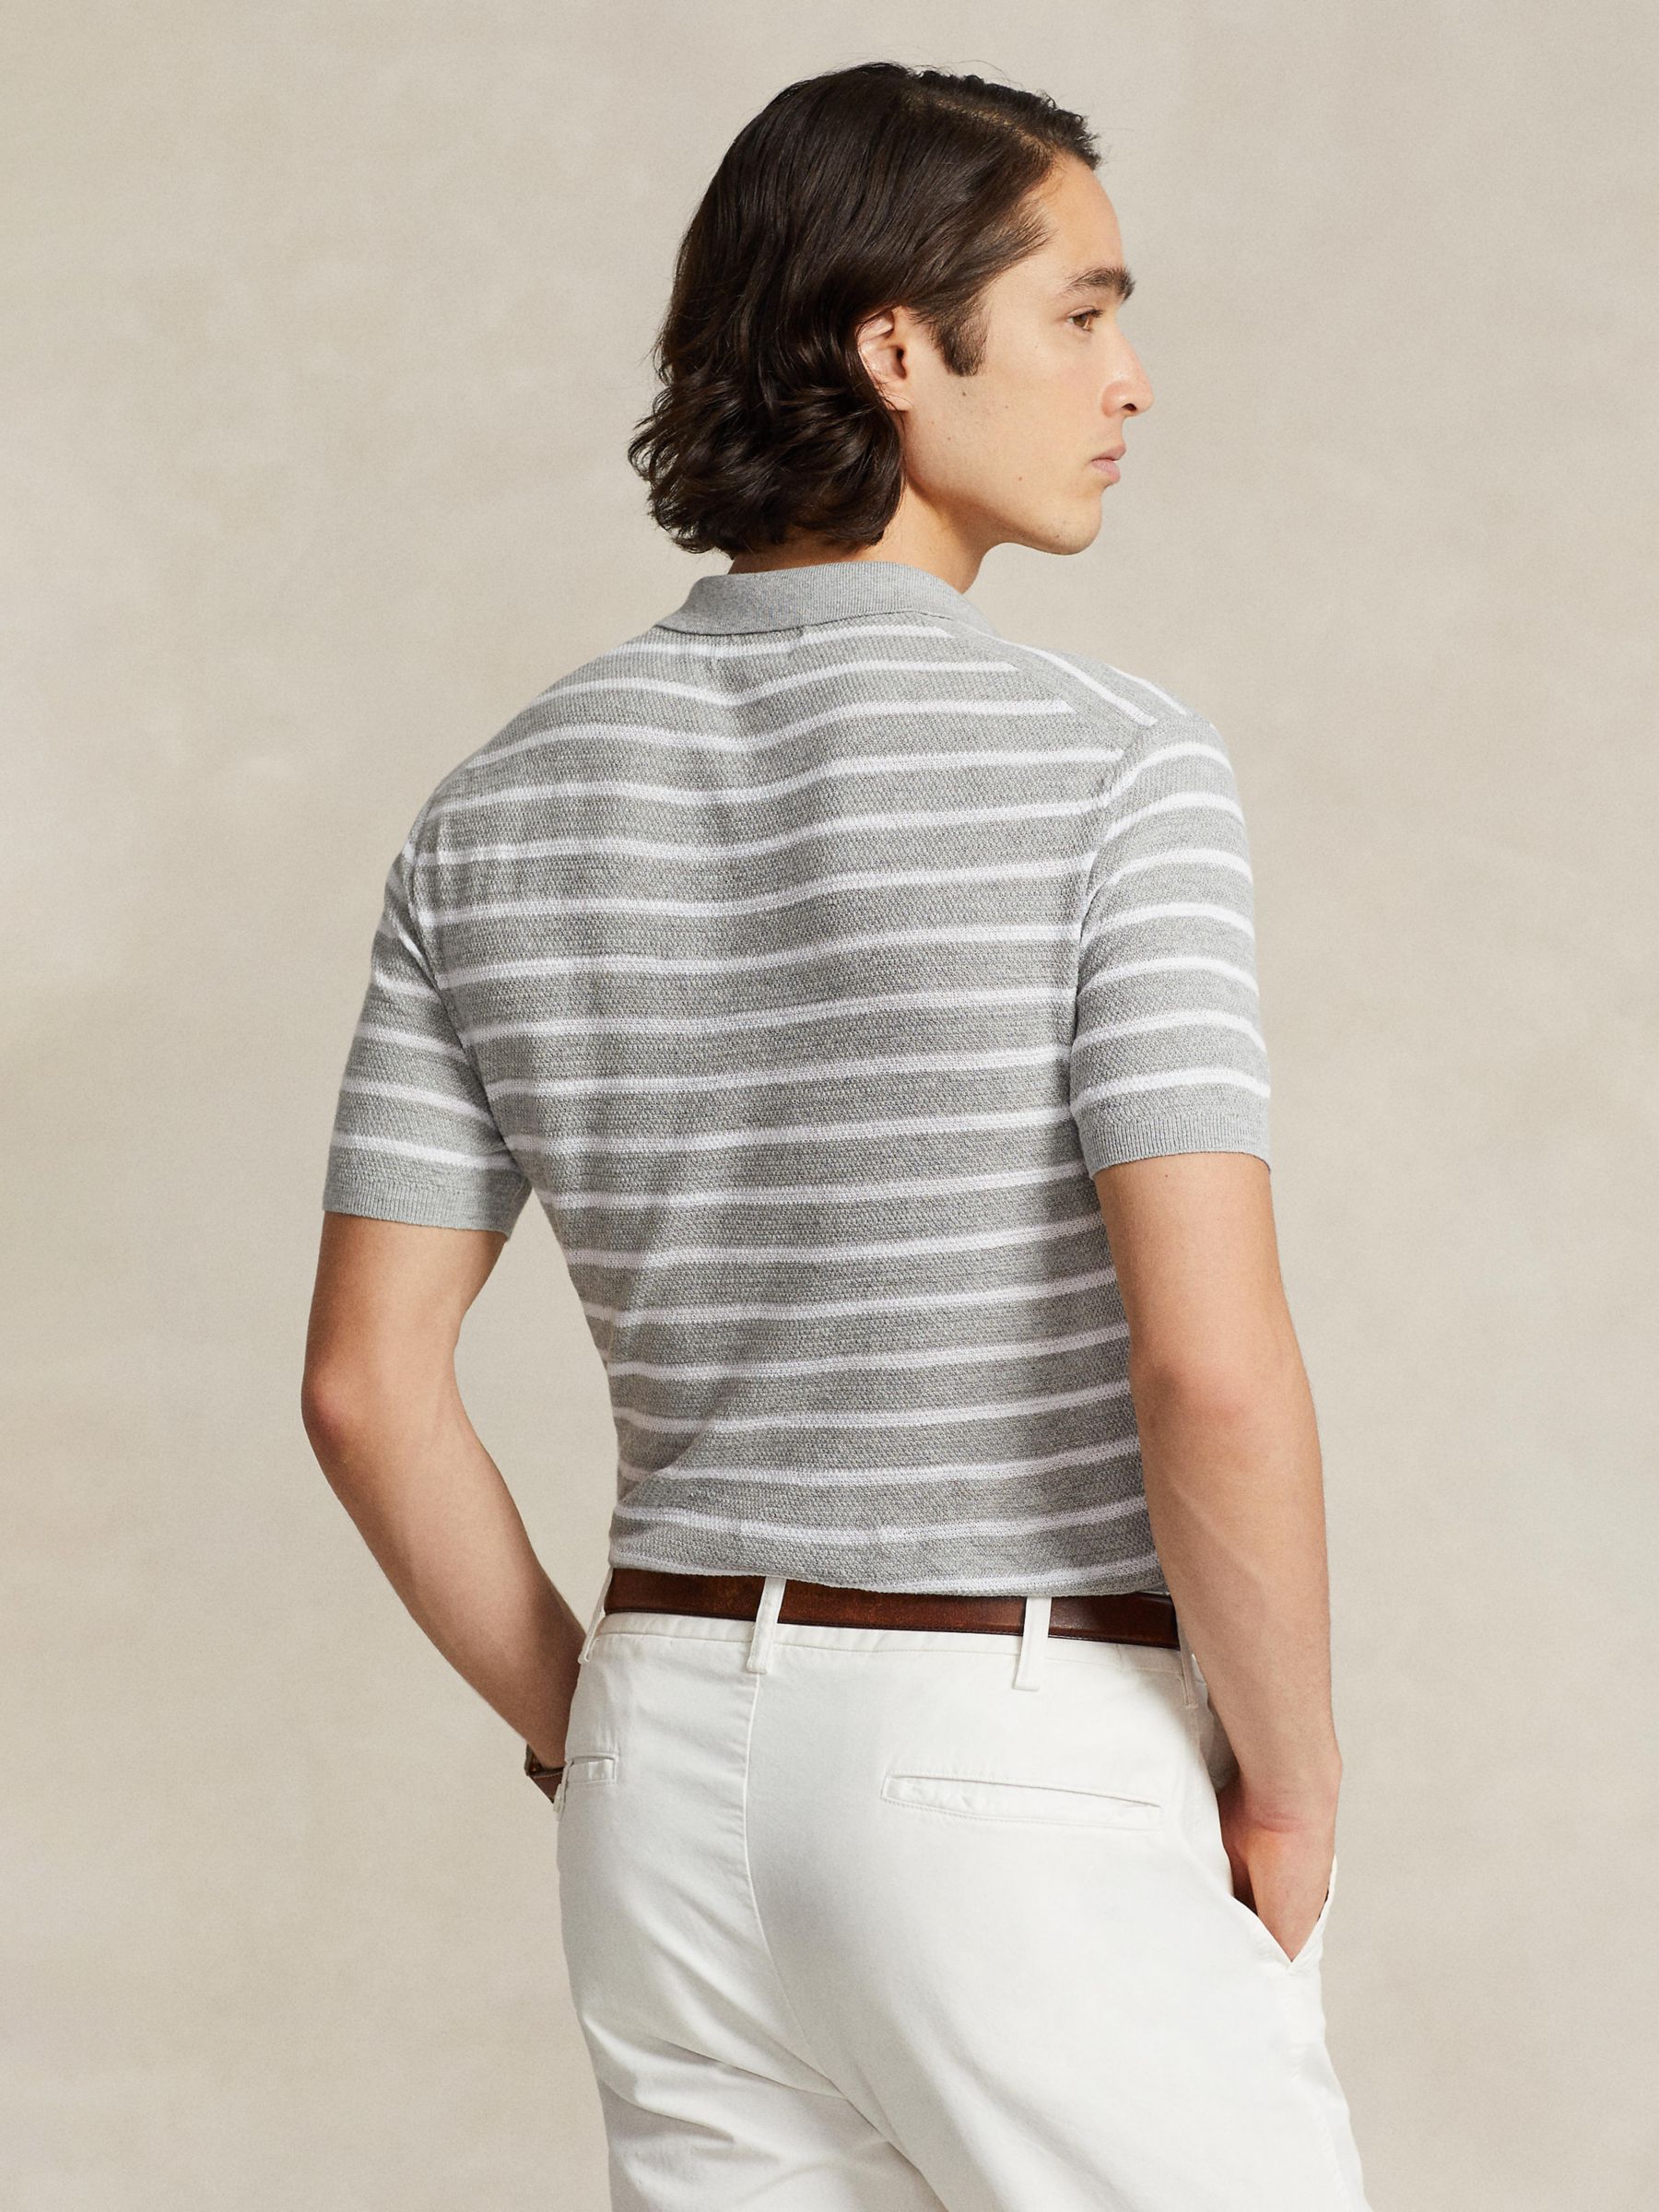 Buy Polo Ralph Lauren Striped Linen Blend Polo Shirt, Grey Online at johnlewis.com